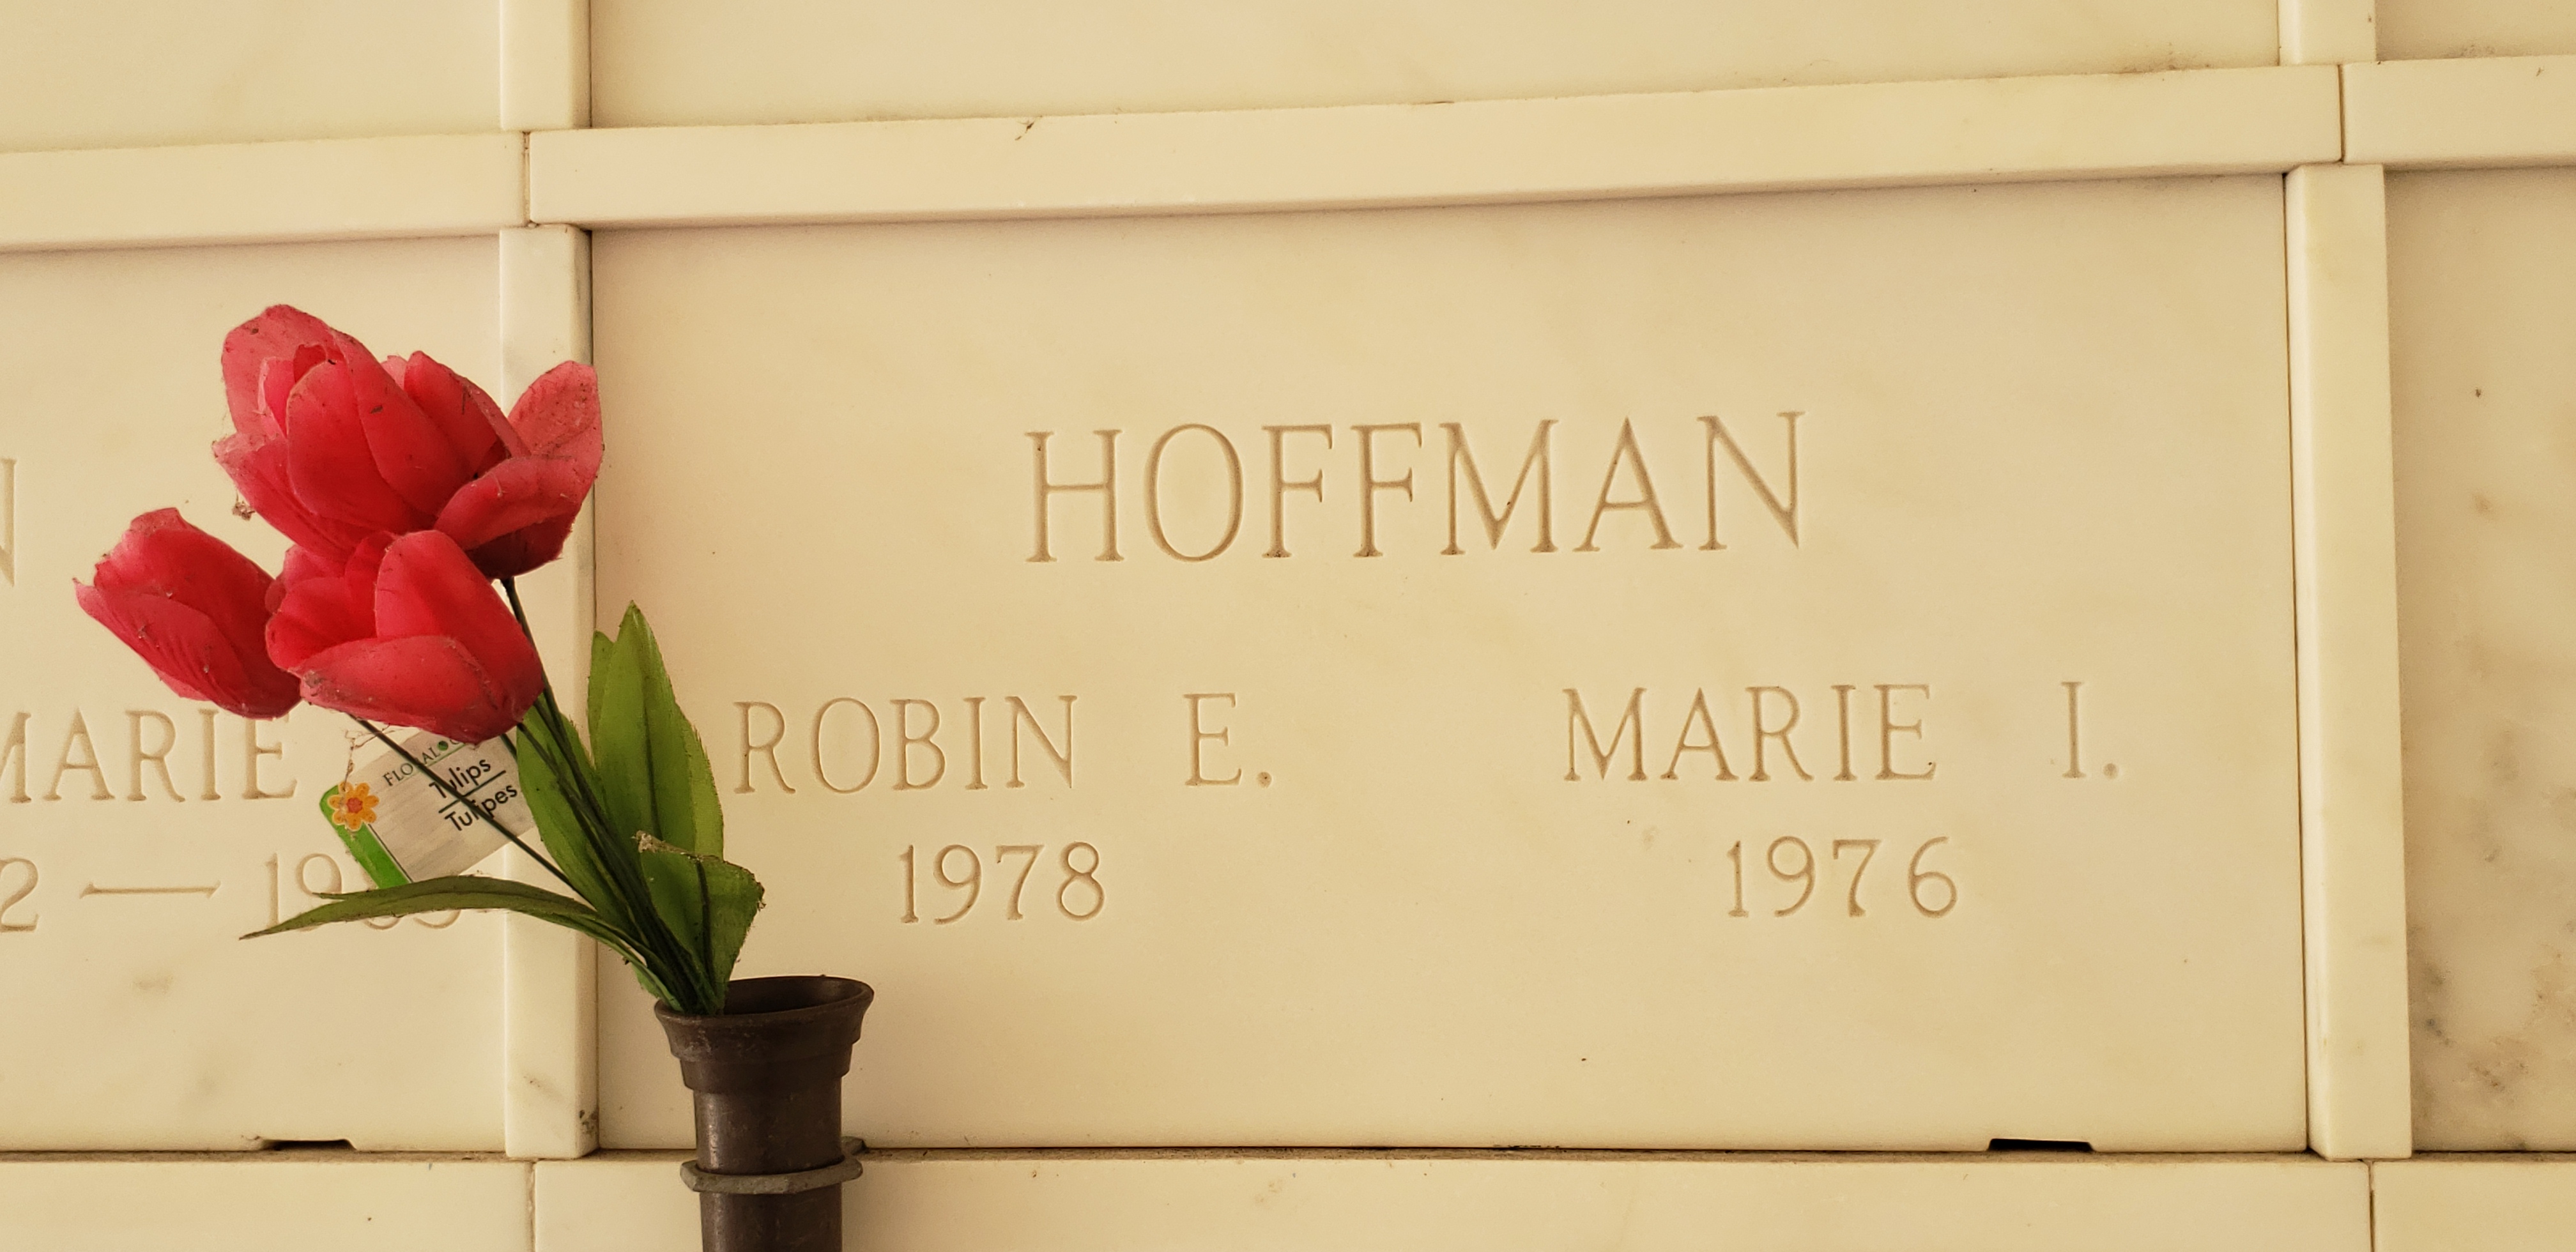 Marie I Hoffman